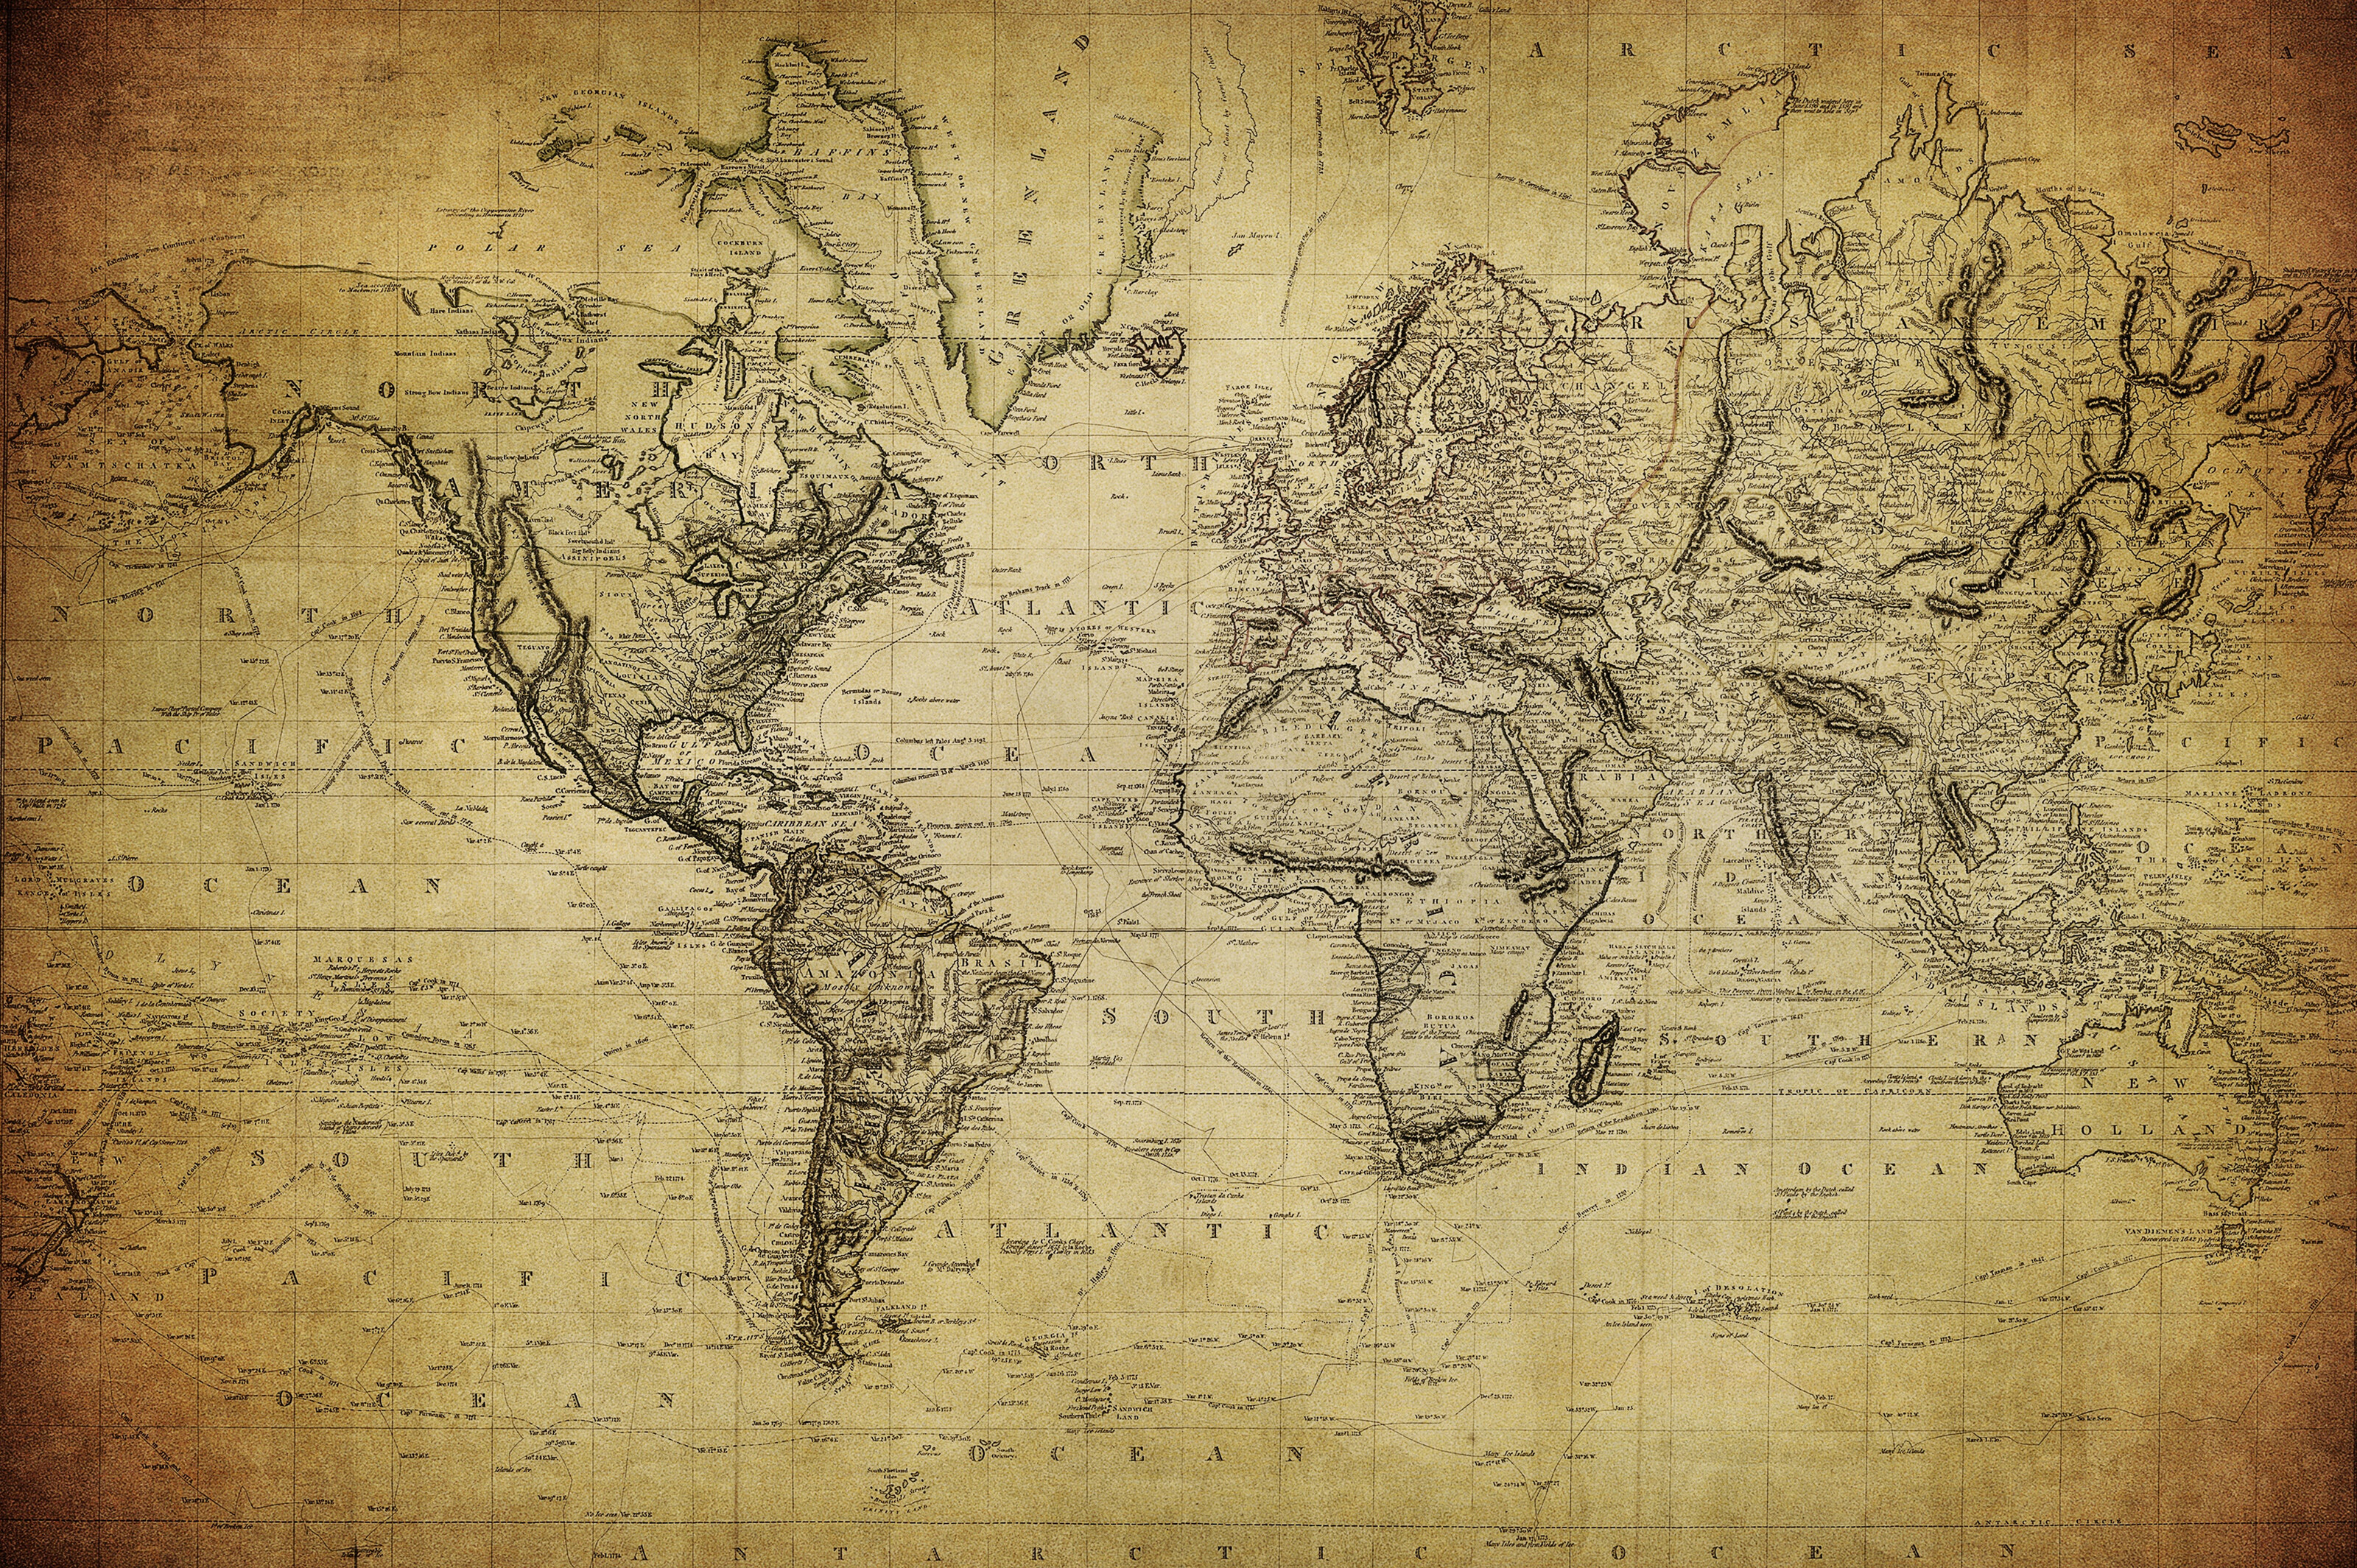 vintage world map wallpaper